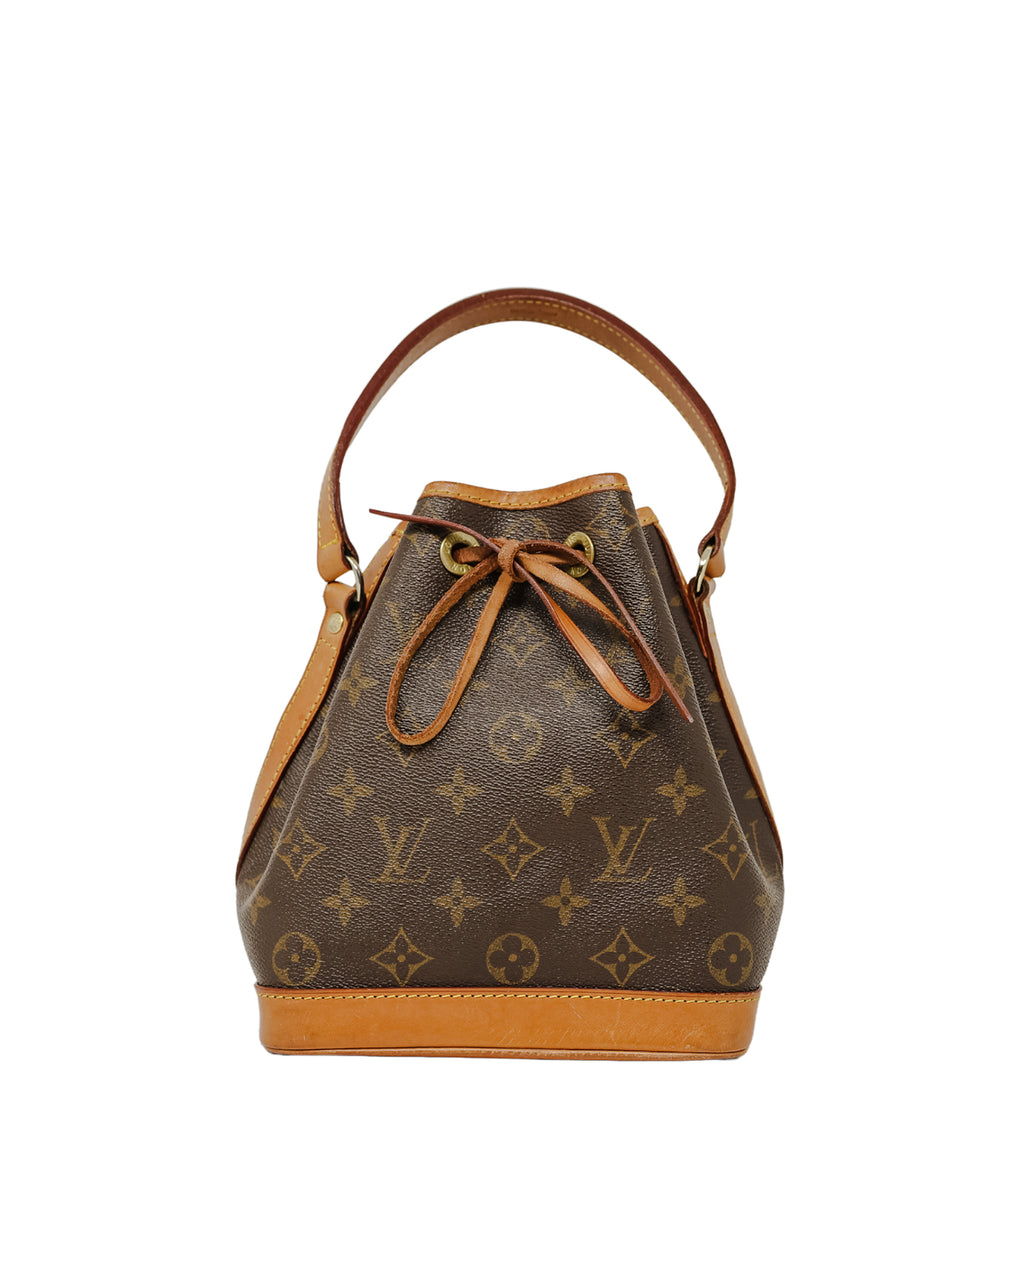 Found by Fred Segal Women's Louis Vuitton Viva Cite GM Shoulder Bag